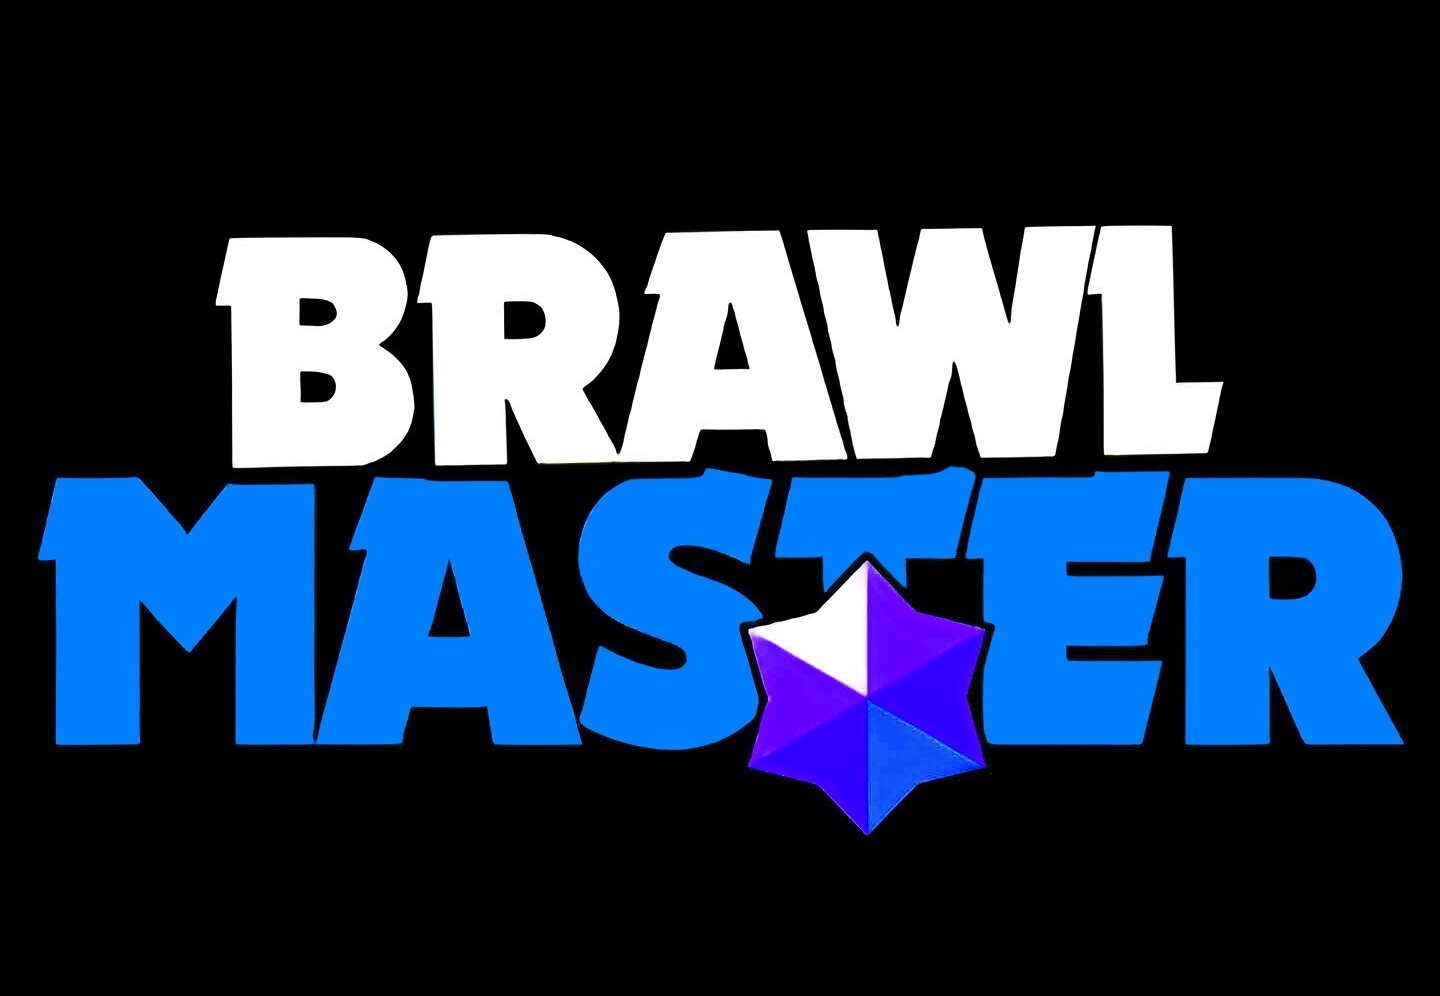 Master Brawl